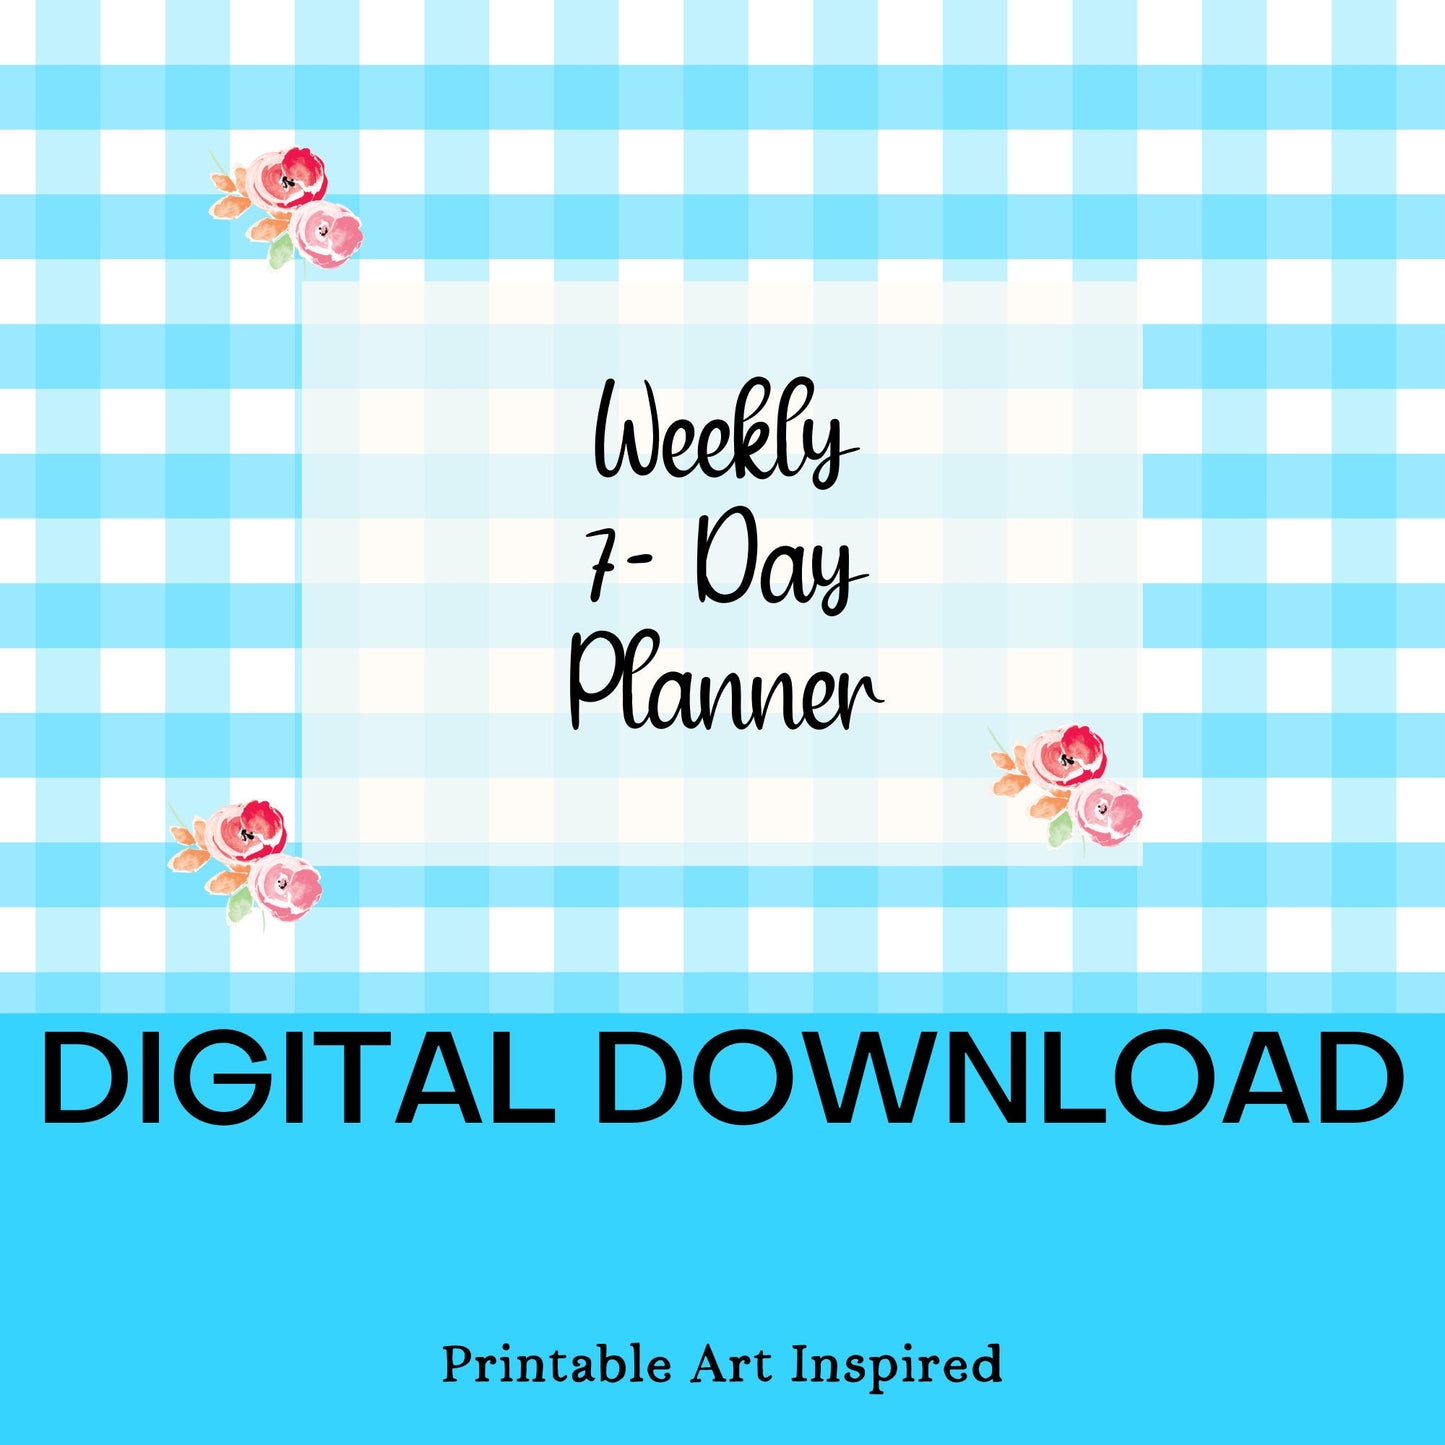 Weekly 7 day Digital Download Planner Planner for Organization